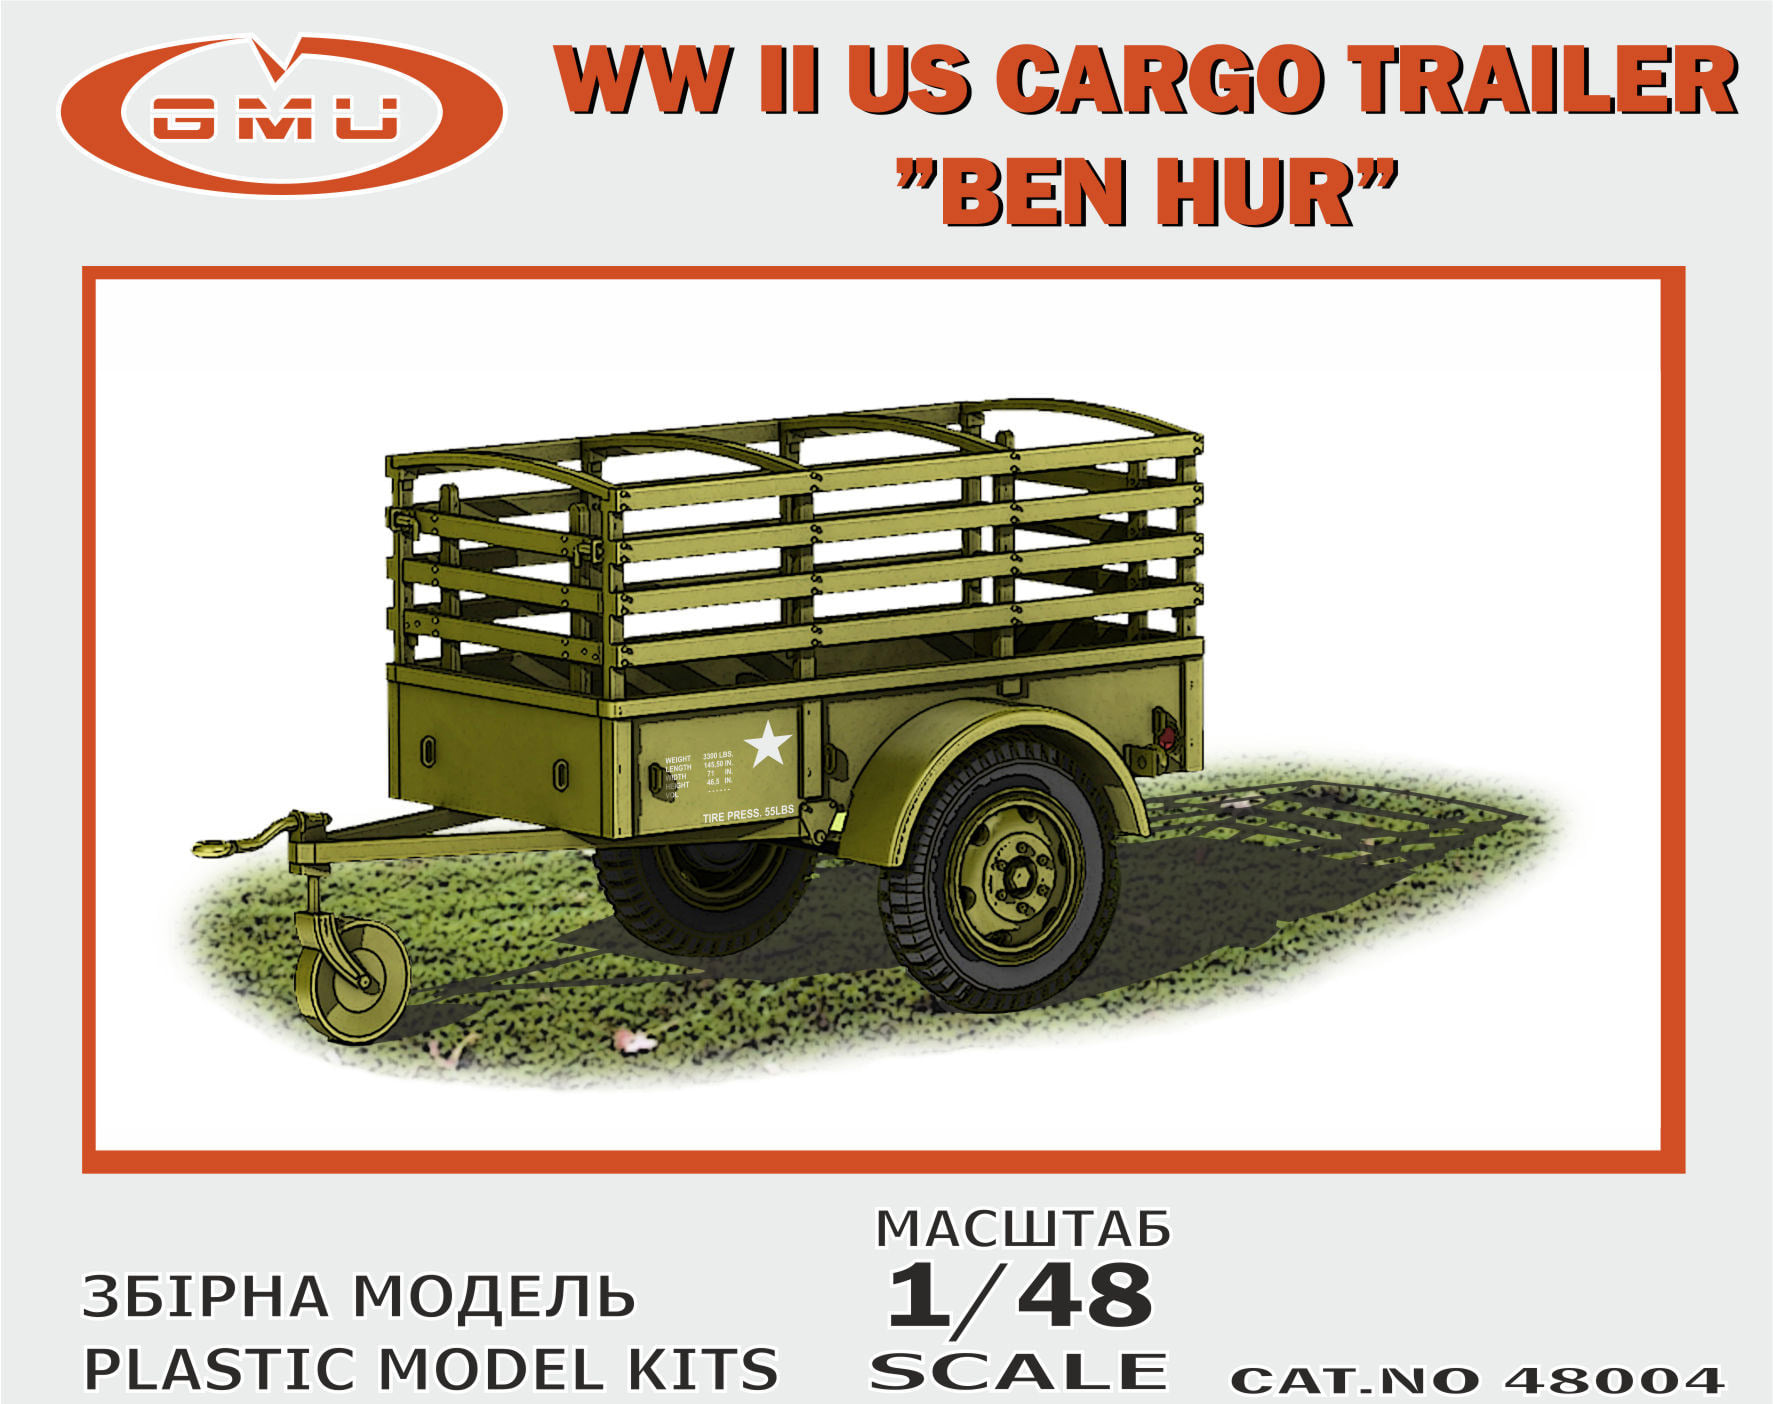 GMU Model 48004 - WW II US CARGO TRAILER ”BEN HUR”